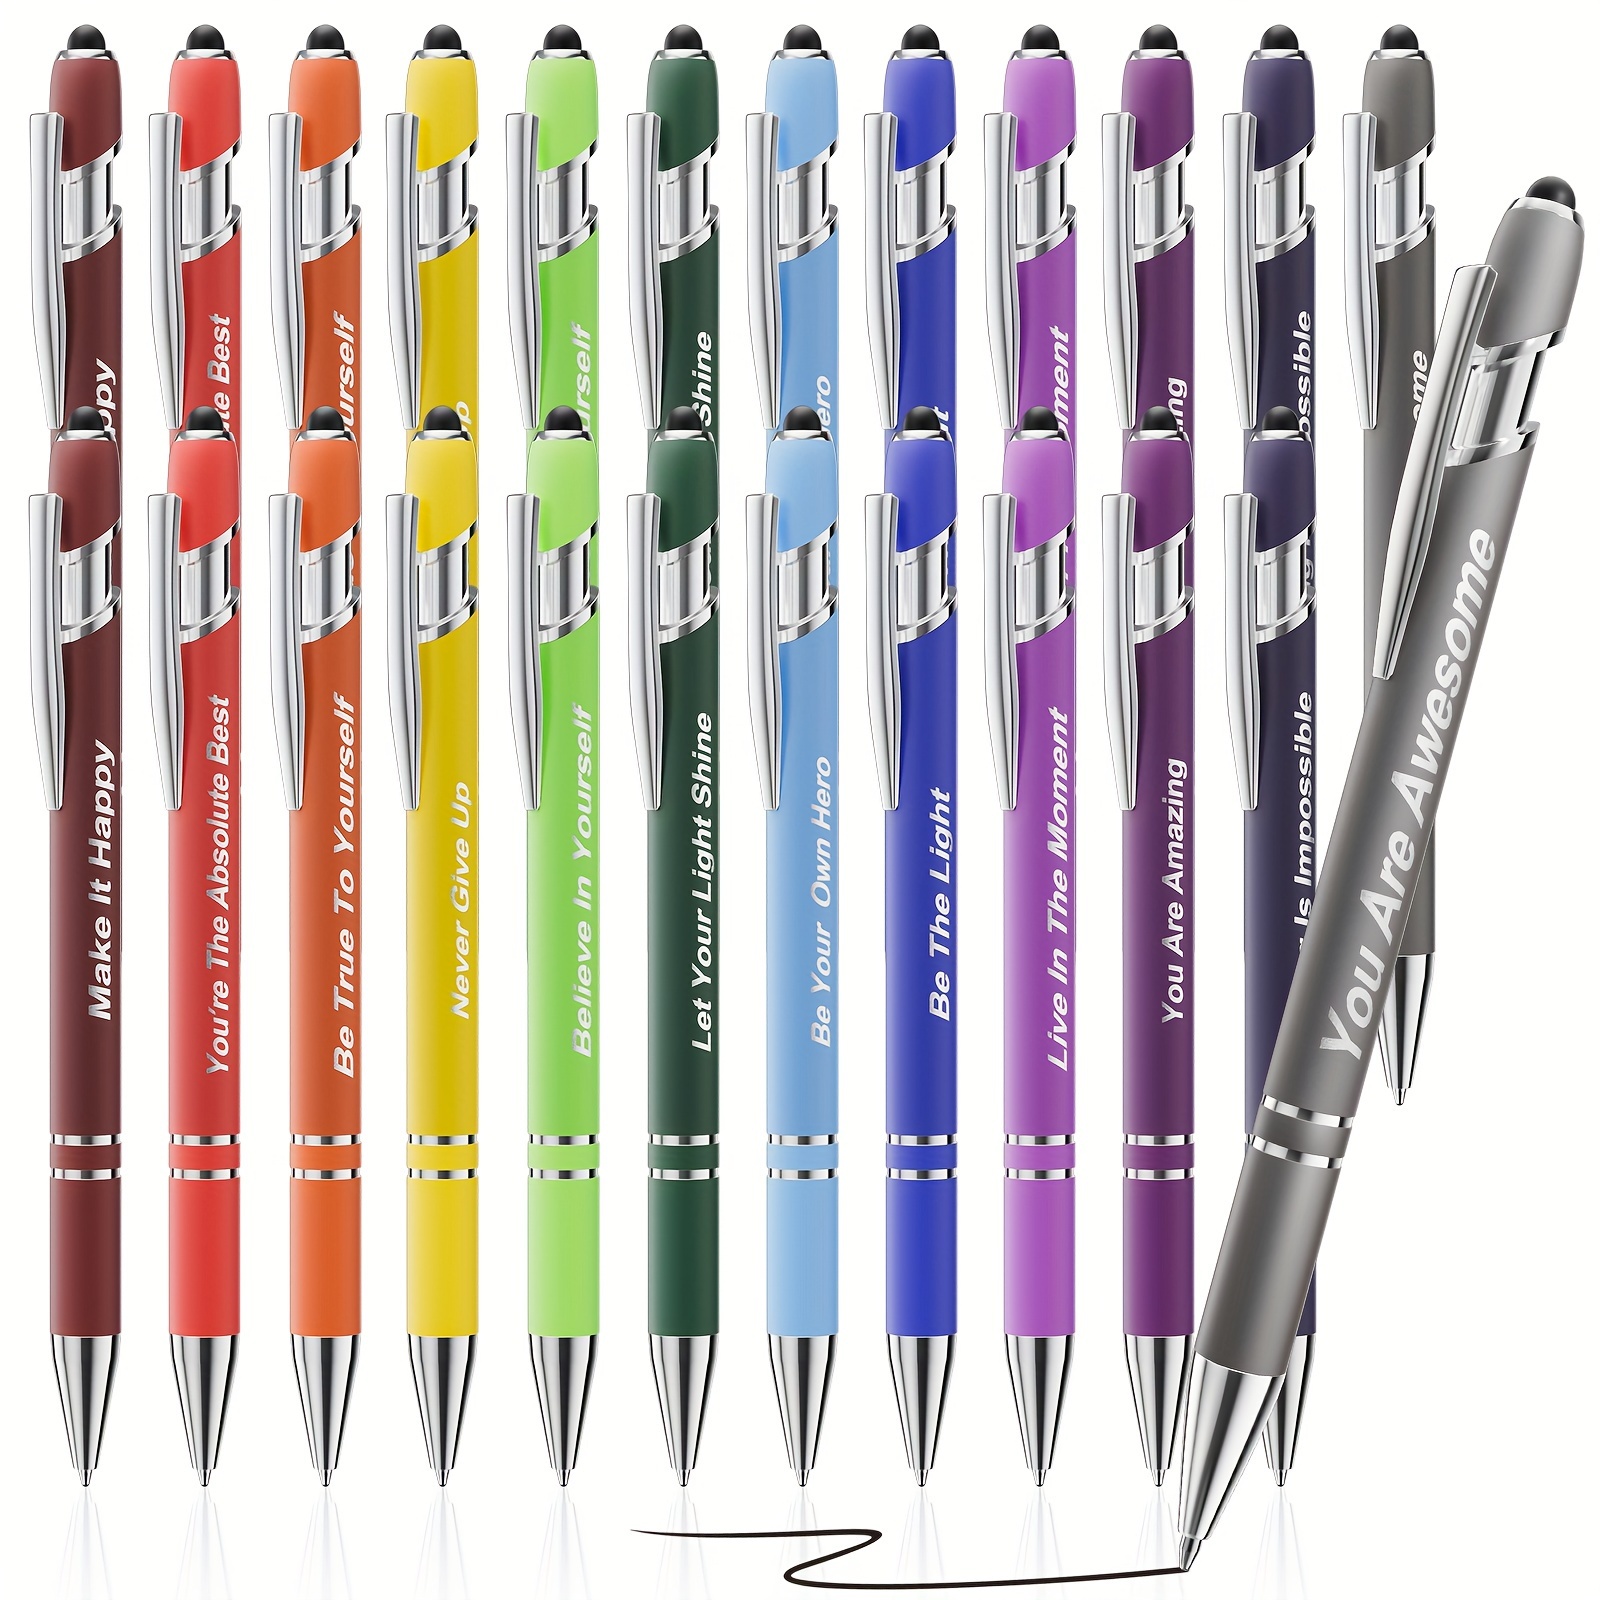 

24pcs Inspirational Ballpoint Pens, Retractable Ballpoint Pen With Stylus Tip, Encouraging Message Pen (multicolored)